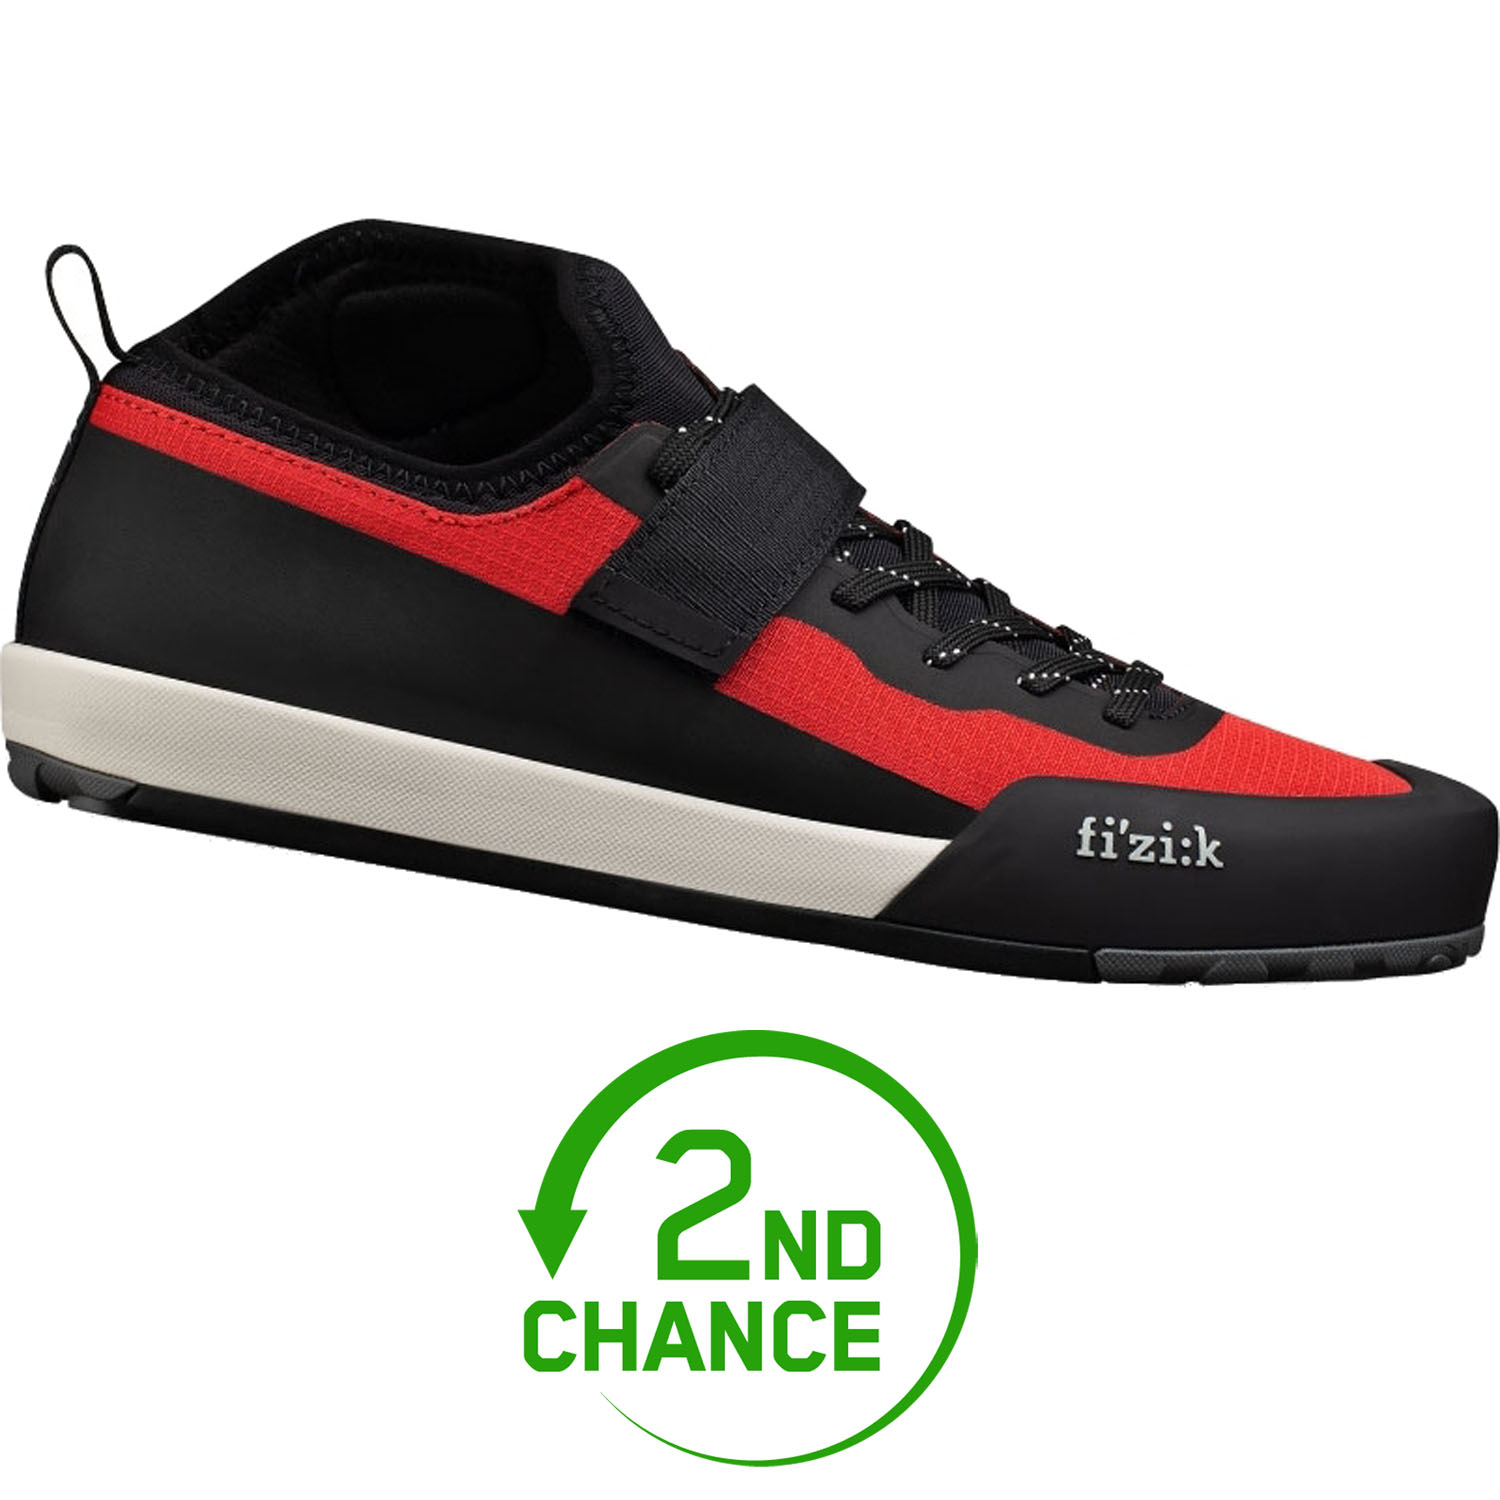 Picture of Fizik Gravita Tensor Flat MTB Shoes Men - red/black - 2nd Choice